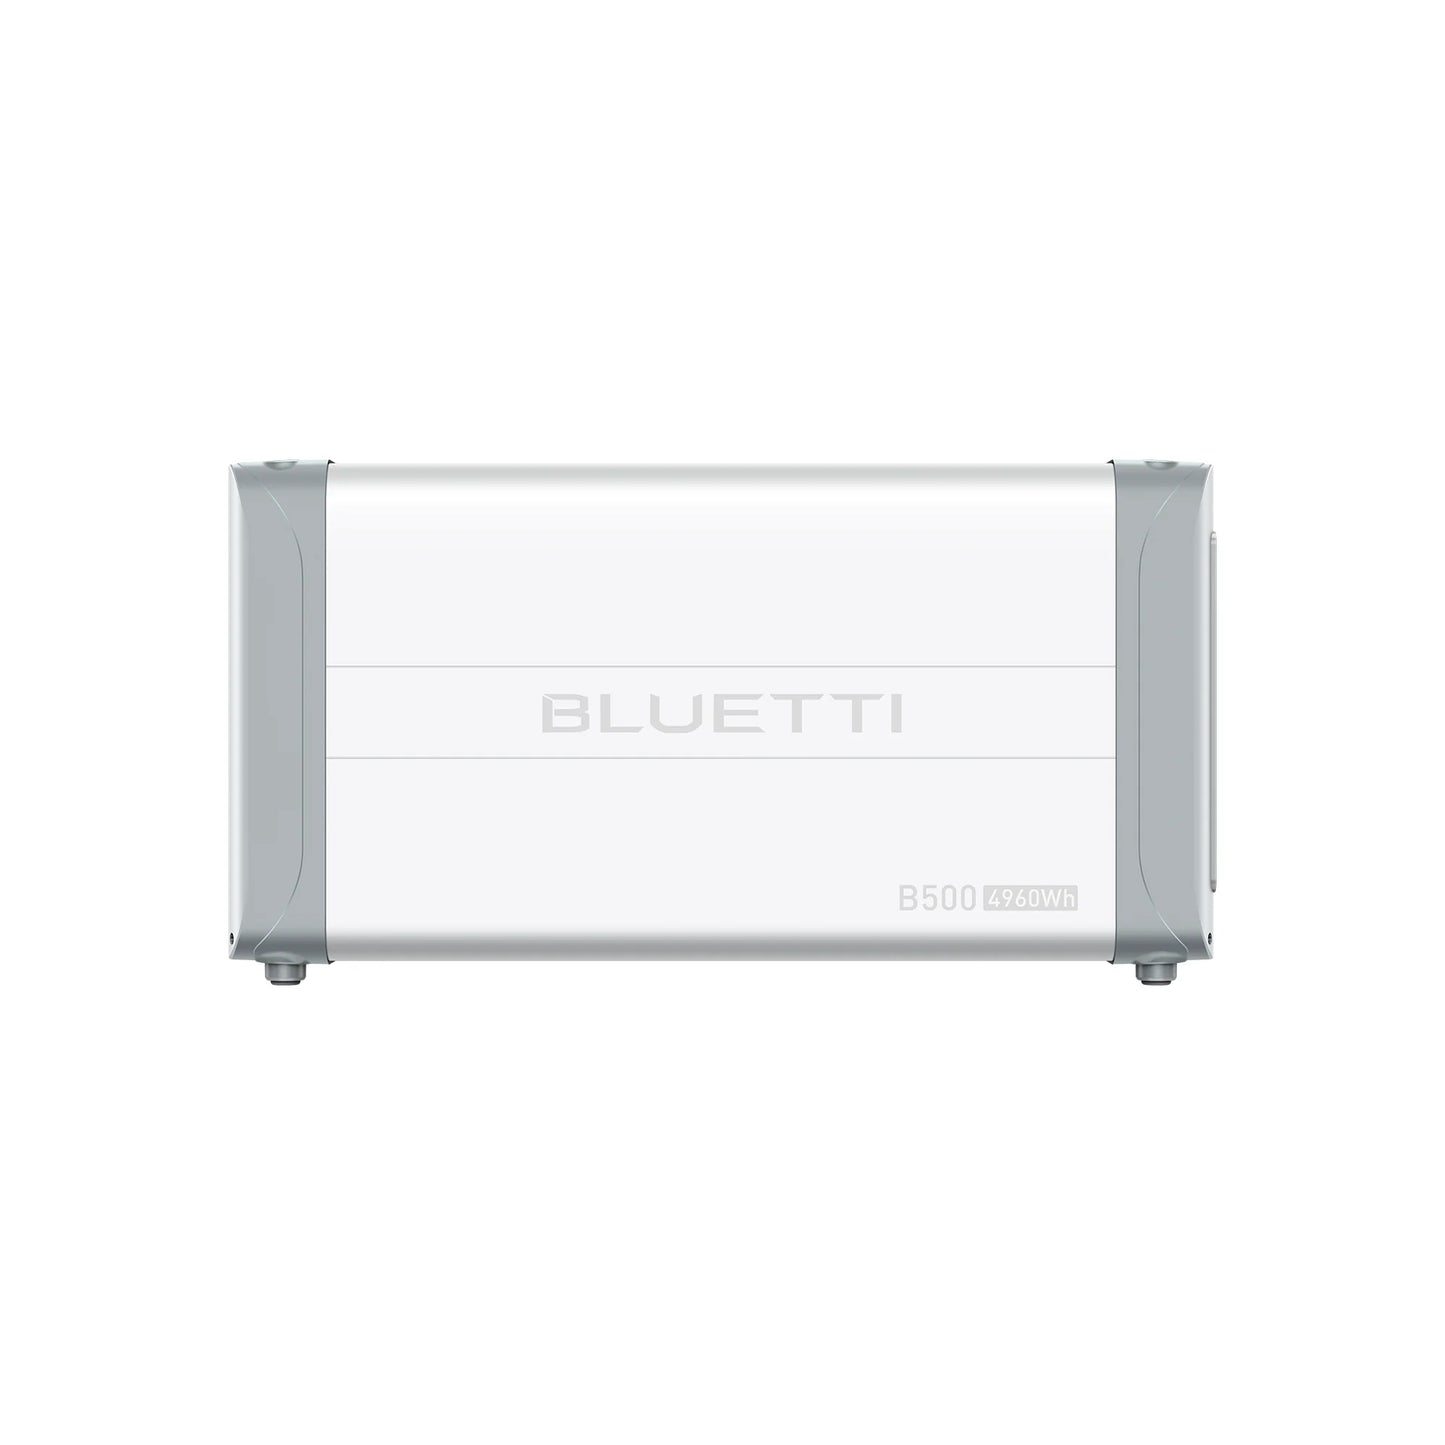 BLUETTI EP900 + B500 Home Battery Backup